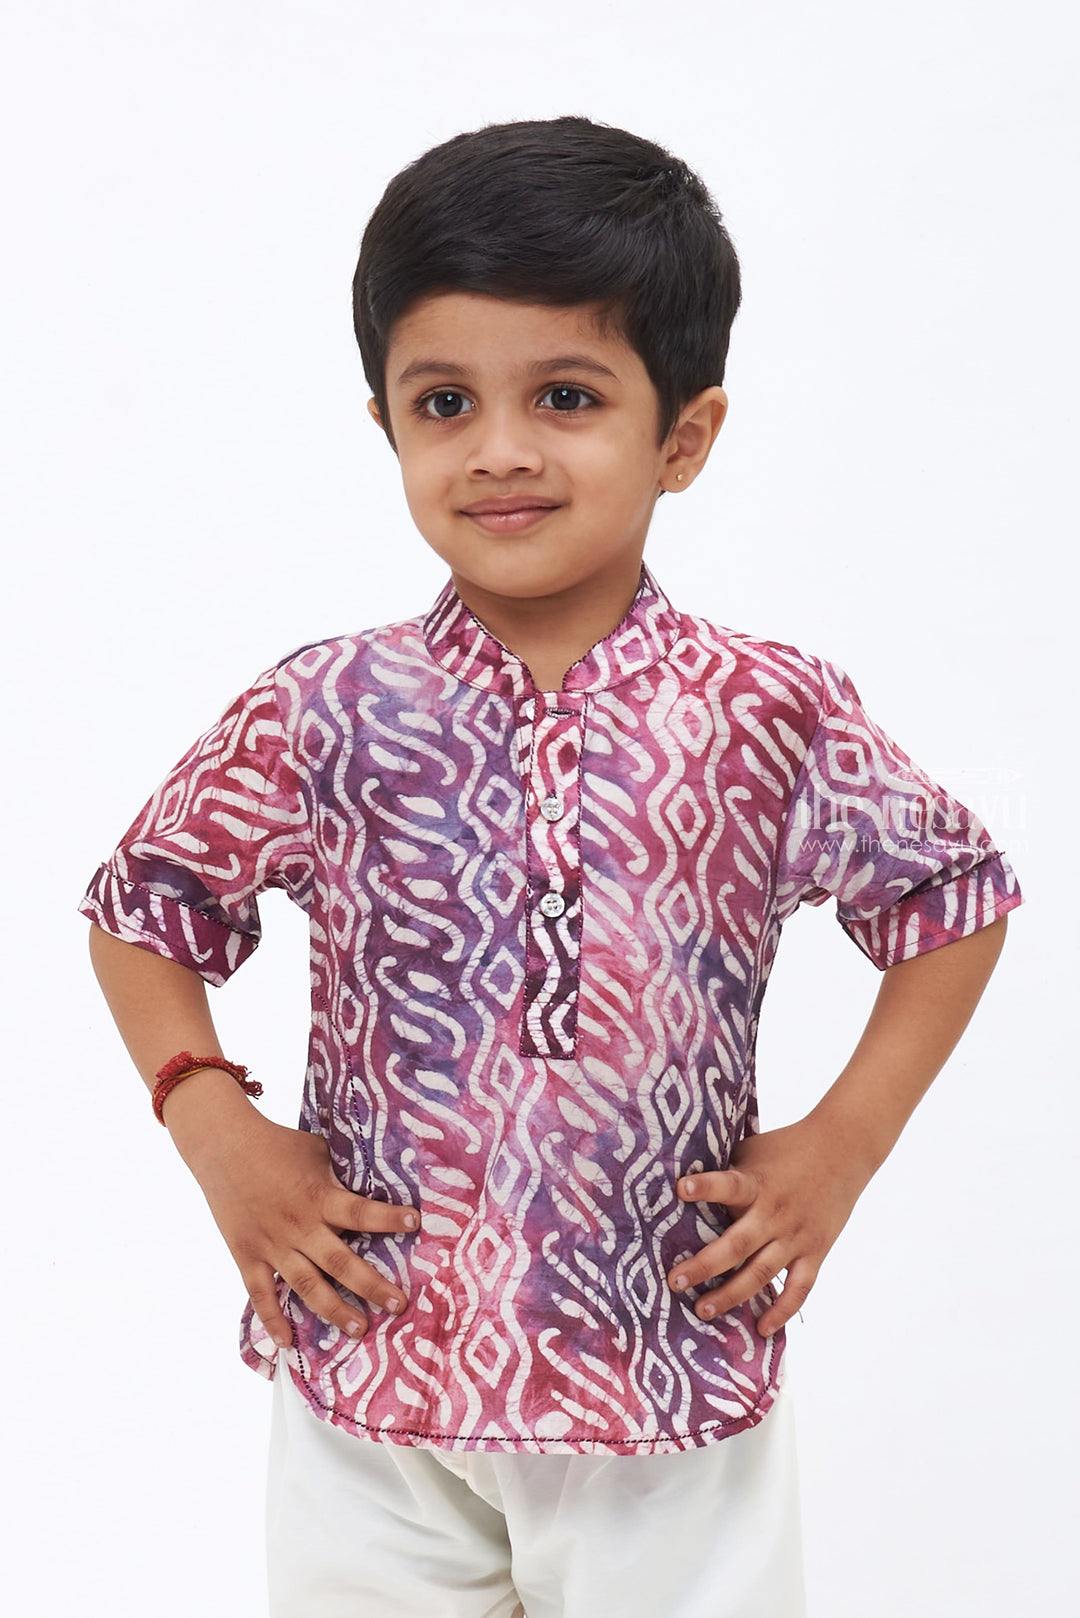 The Nesavu Boys Kurtha Shirt Boys Purple Cotton Shirt with Abstract Geometric Pattern Nesavu 16 (1Y) / Purple / Chanderi BS114A-16 Boys Purple Cotton Shirt Abstract Geometric Design | Trendy Casual Wear | The Nesavu